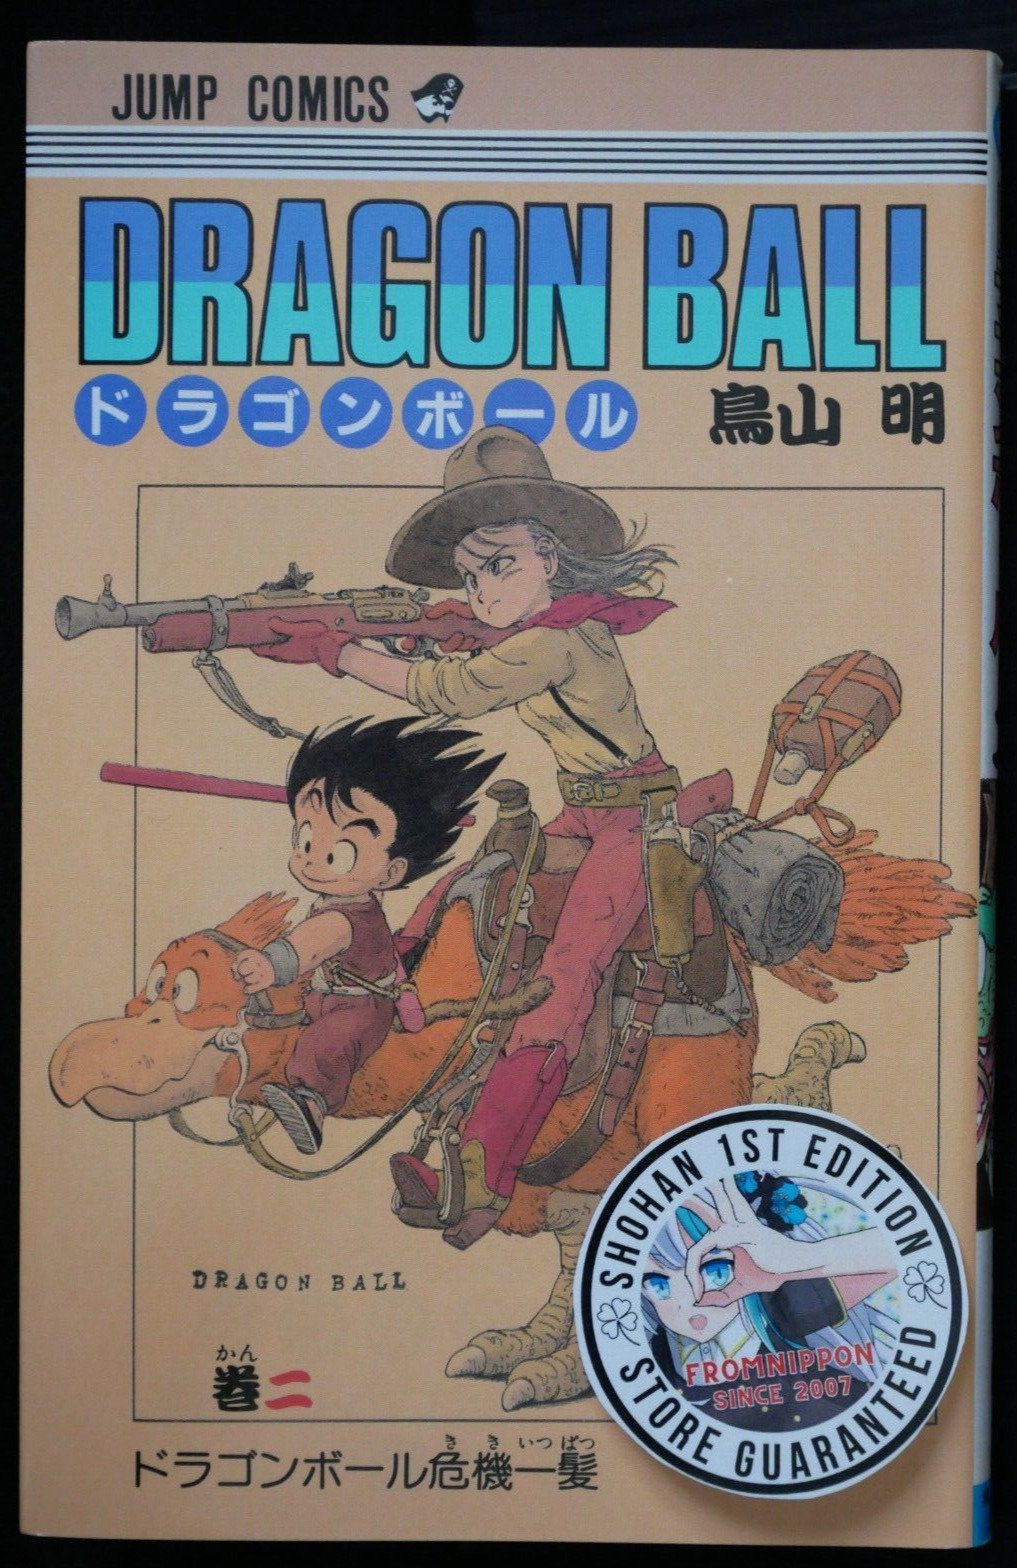 SHOHAN (1st Edition): Dragon Ball vol.2 Manga by Akira Toriyama - from JAPAN